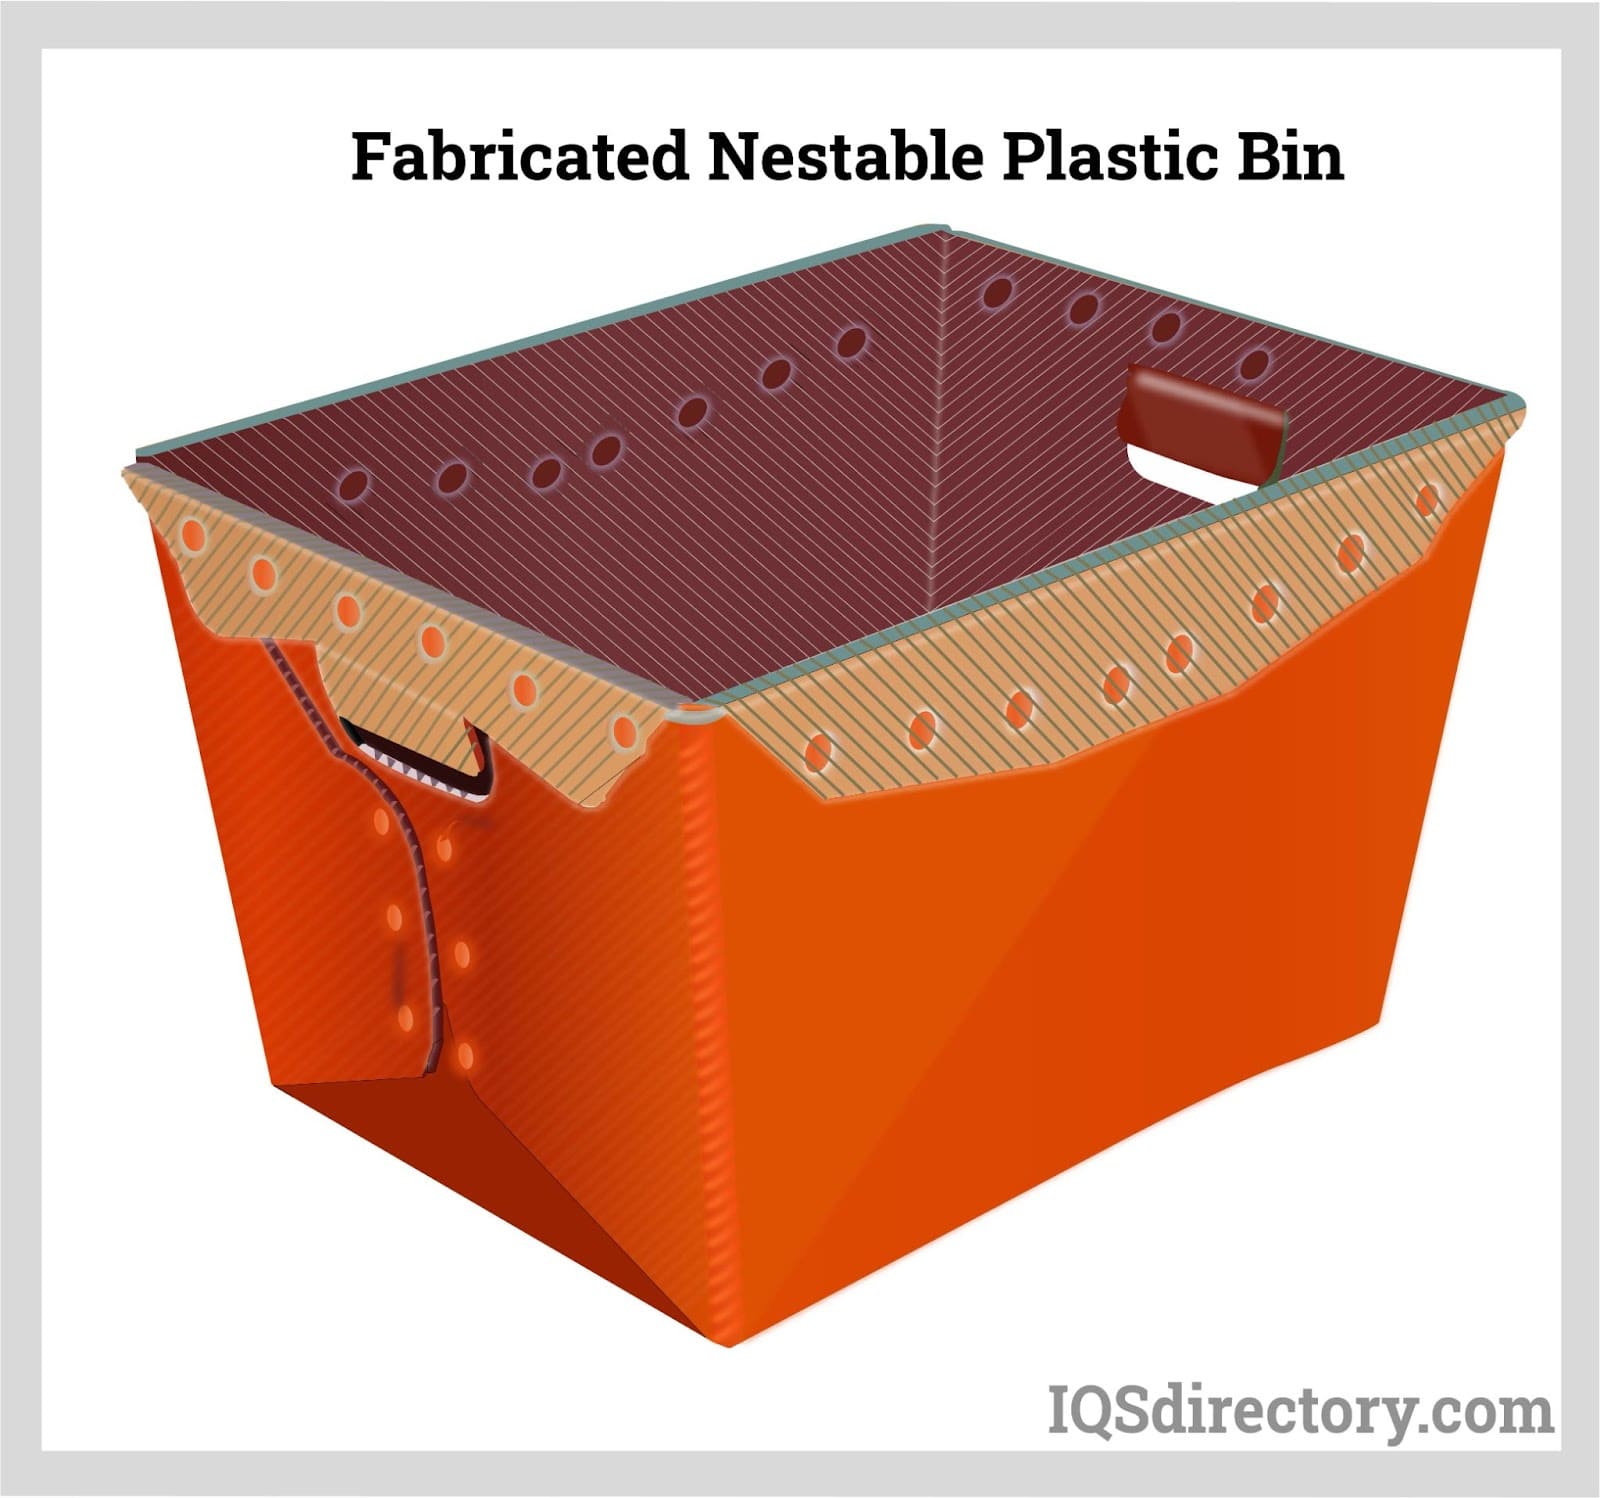 Fabricated Nestable Plastic Bin